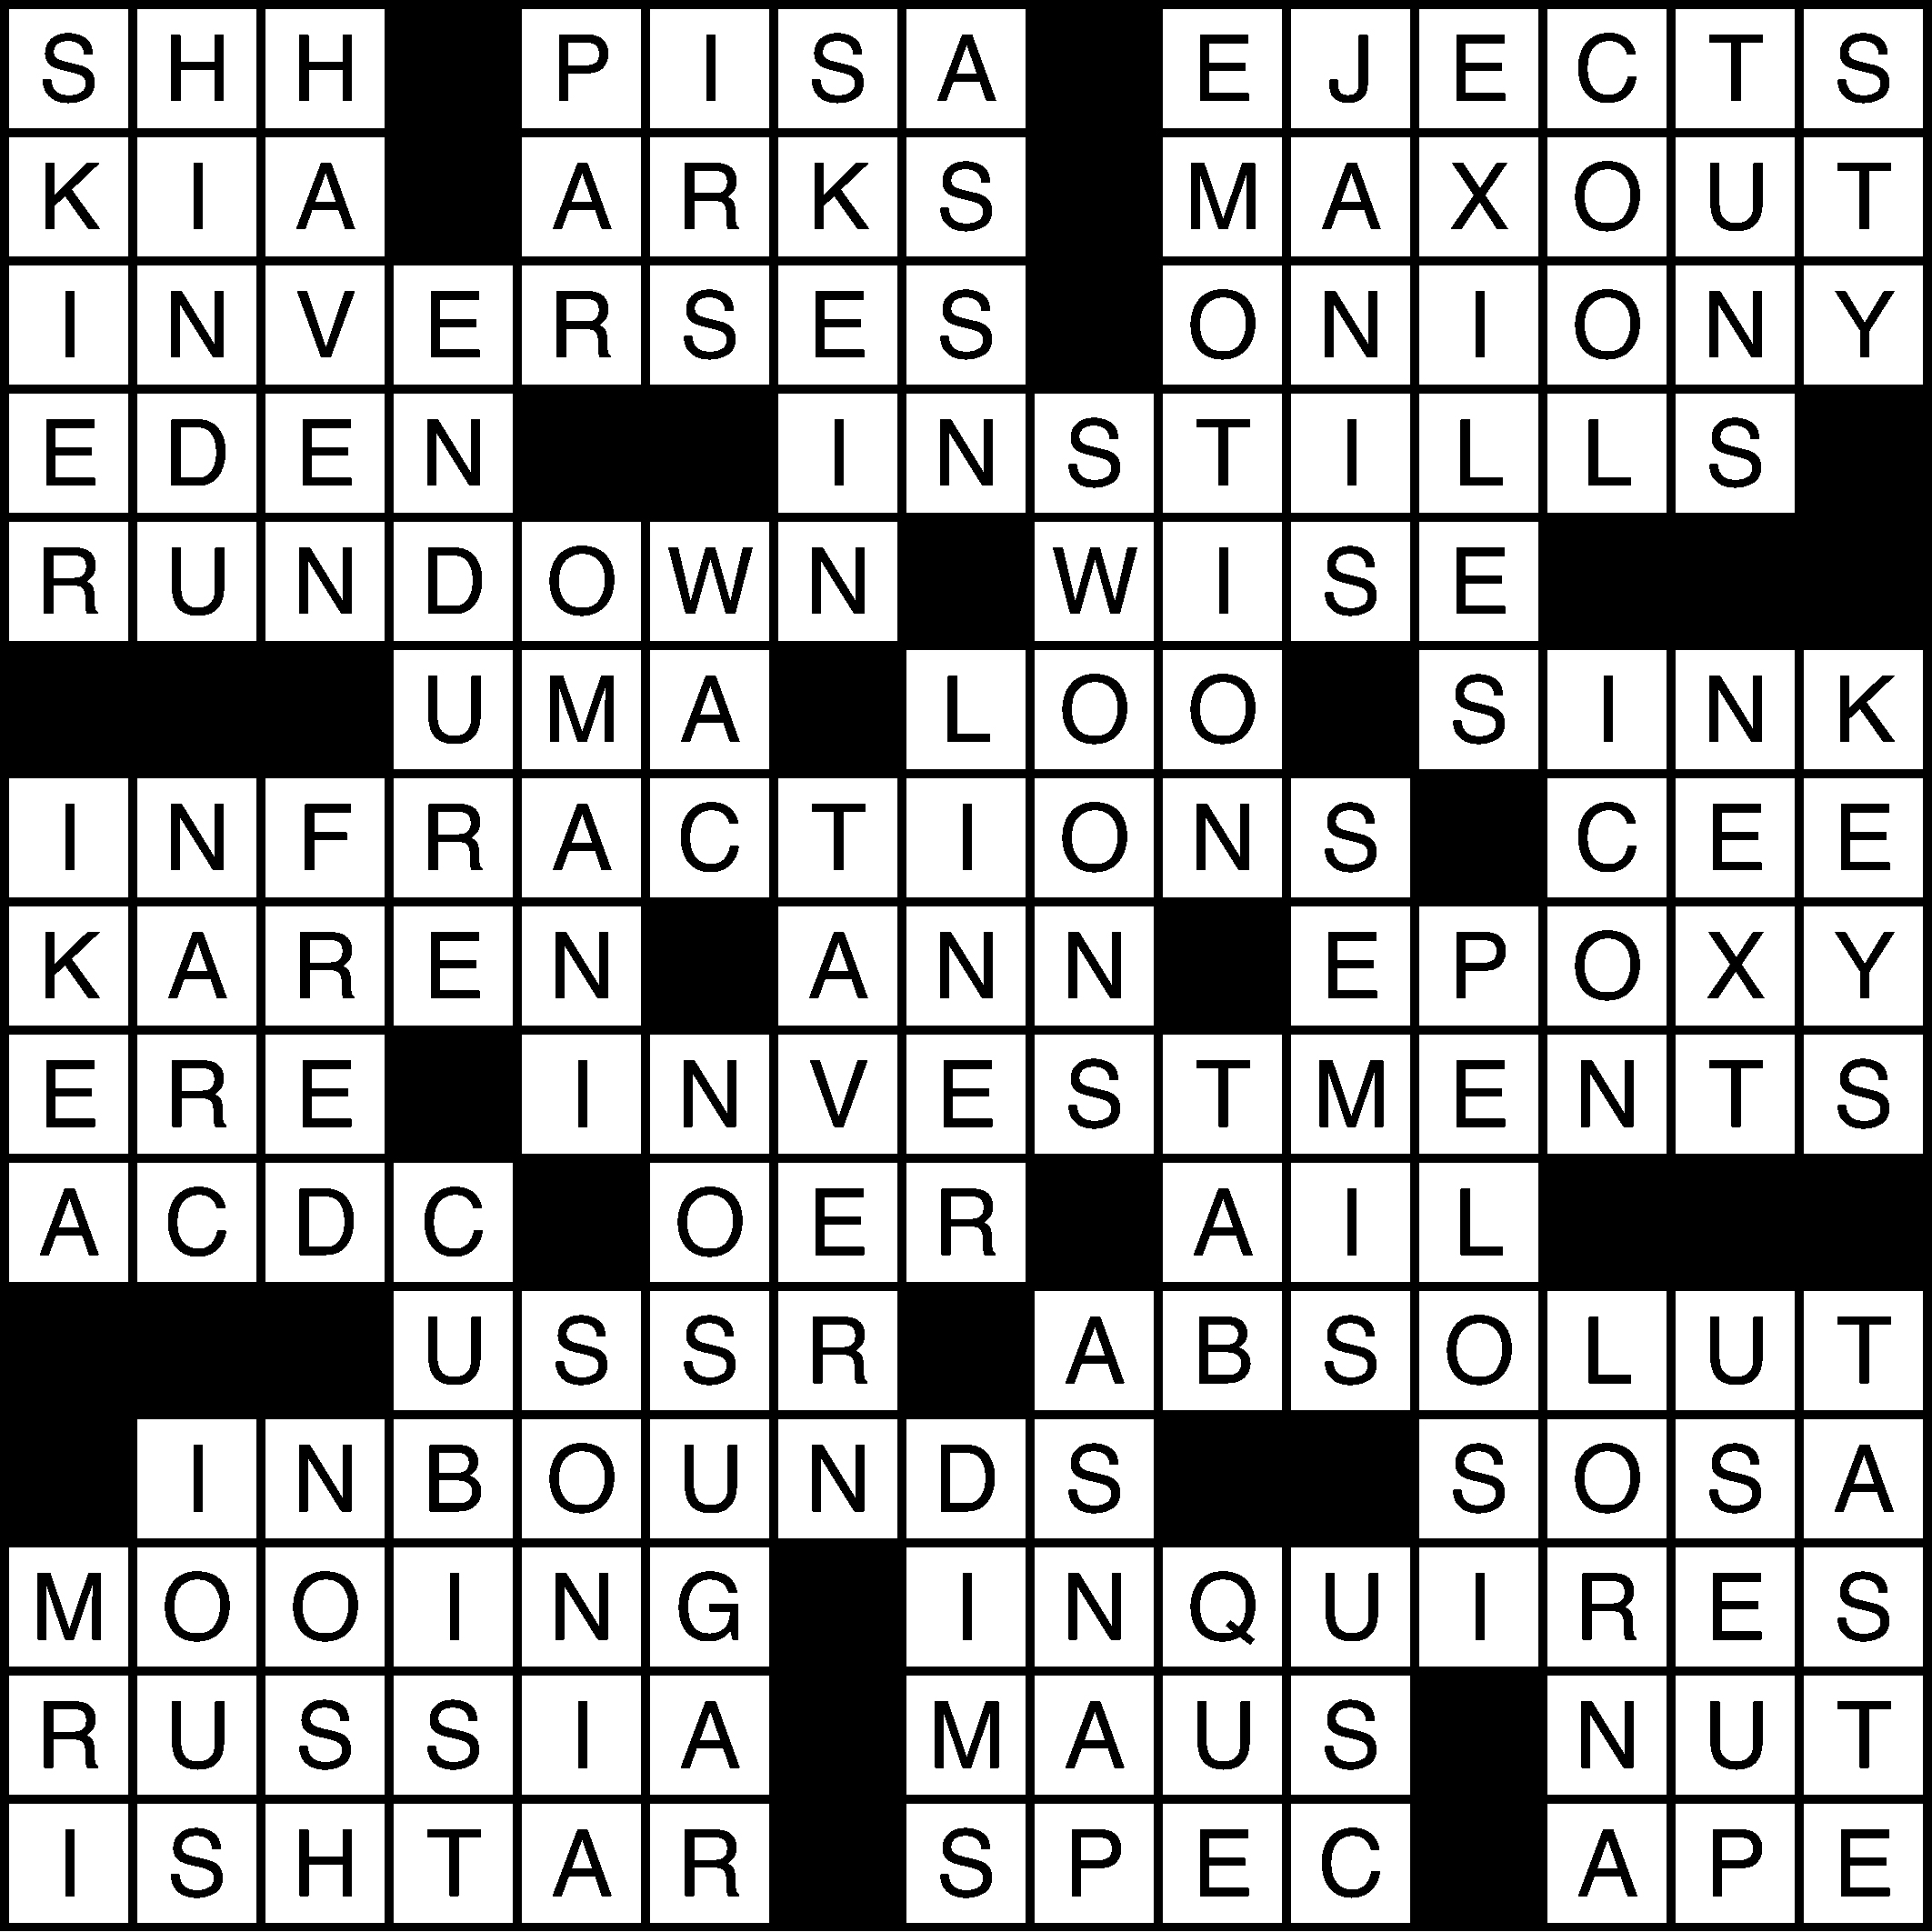 04/02/2014 Crossword: Answers